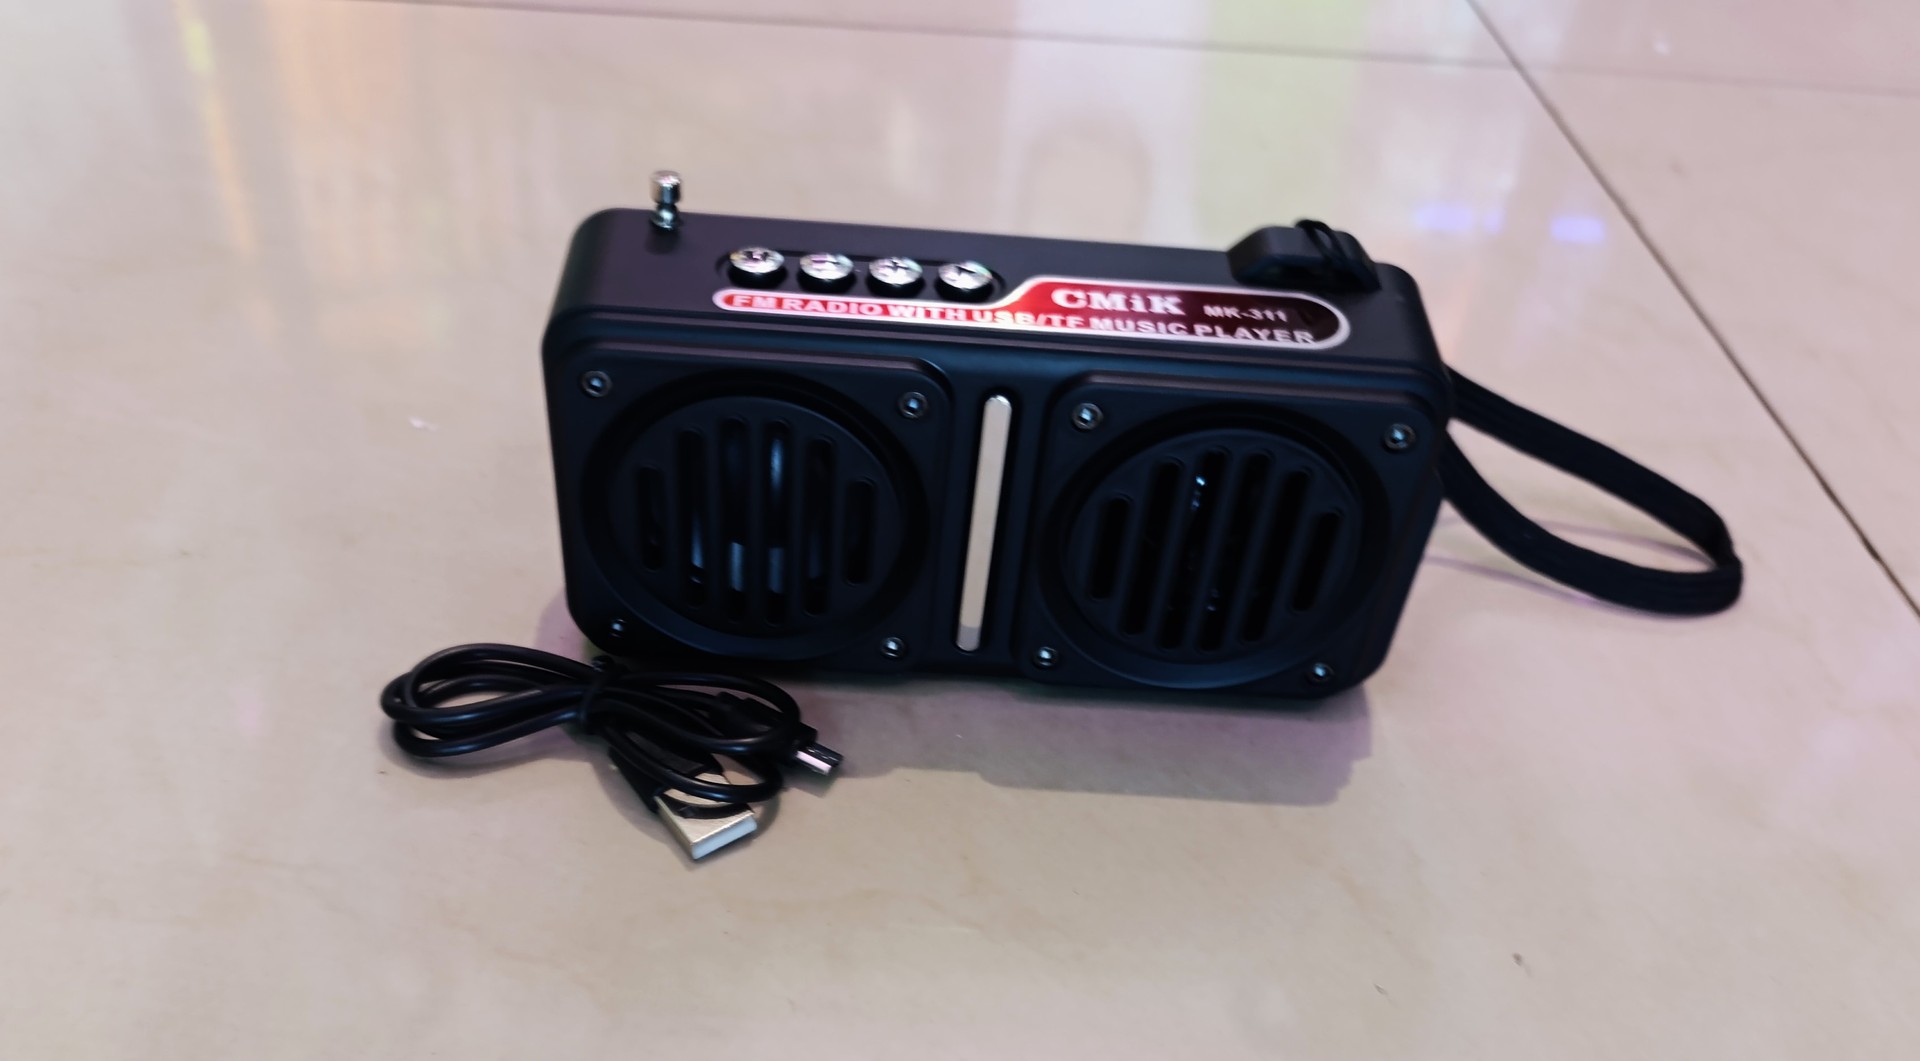 camaras y audio - Radio MK-311, emisora,  2